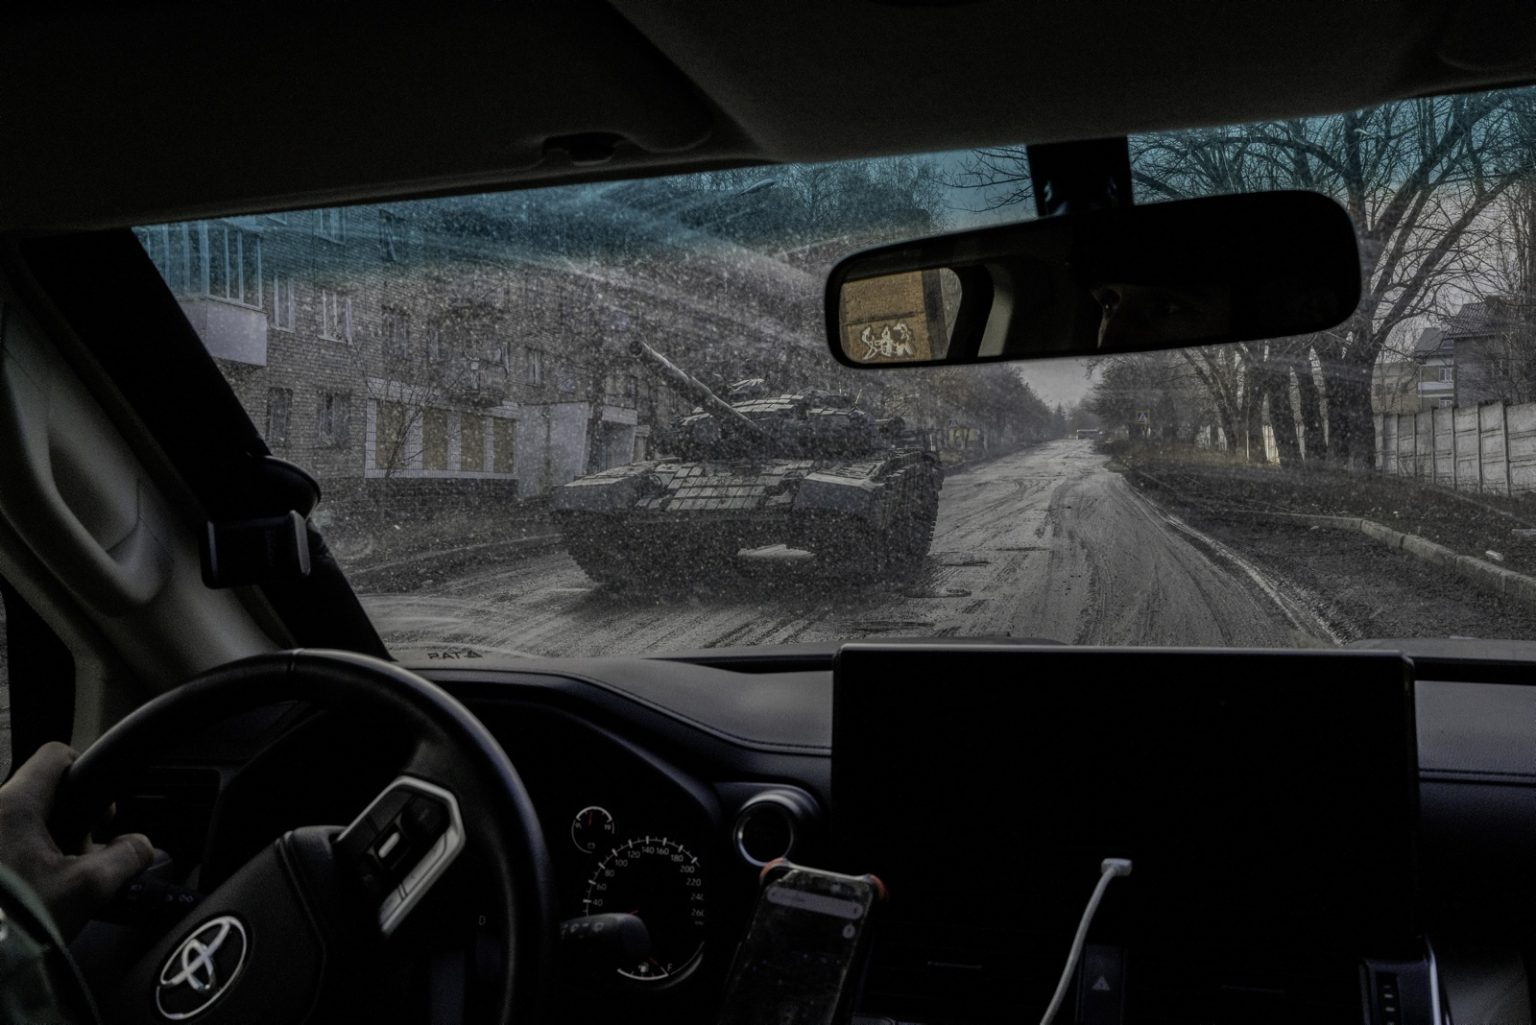 UKRAINE, Bakhmut. January 19, 2023 - A Ukrainian tank passes along a deserted road in Bakhmut. ><
UCRAINA, Bakhmut. 19 gennaio 2023 - Un carro armato ucraino passa lungo una strada deserta a Bakhmut.